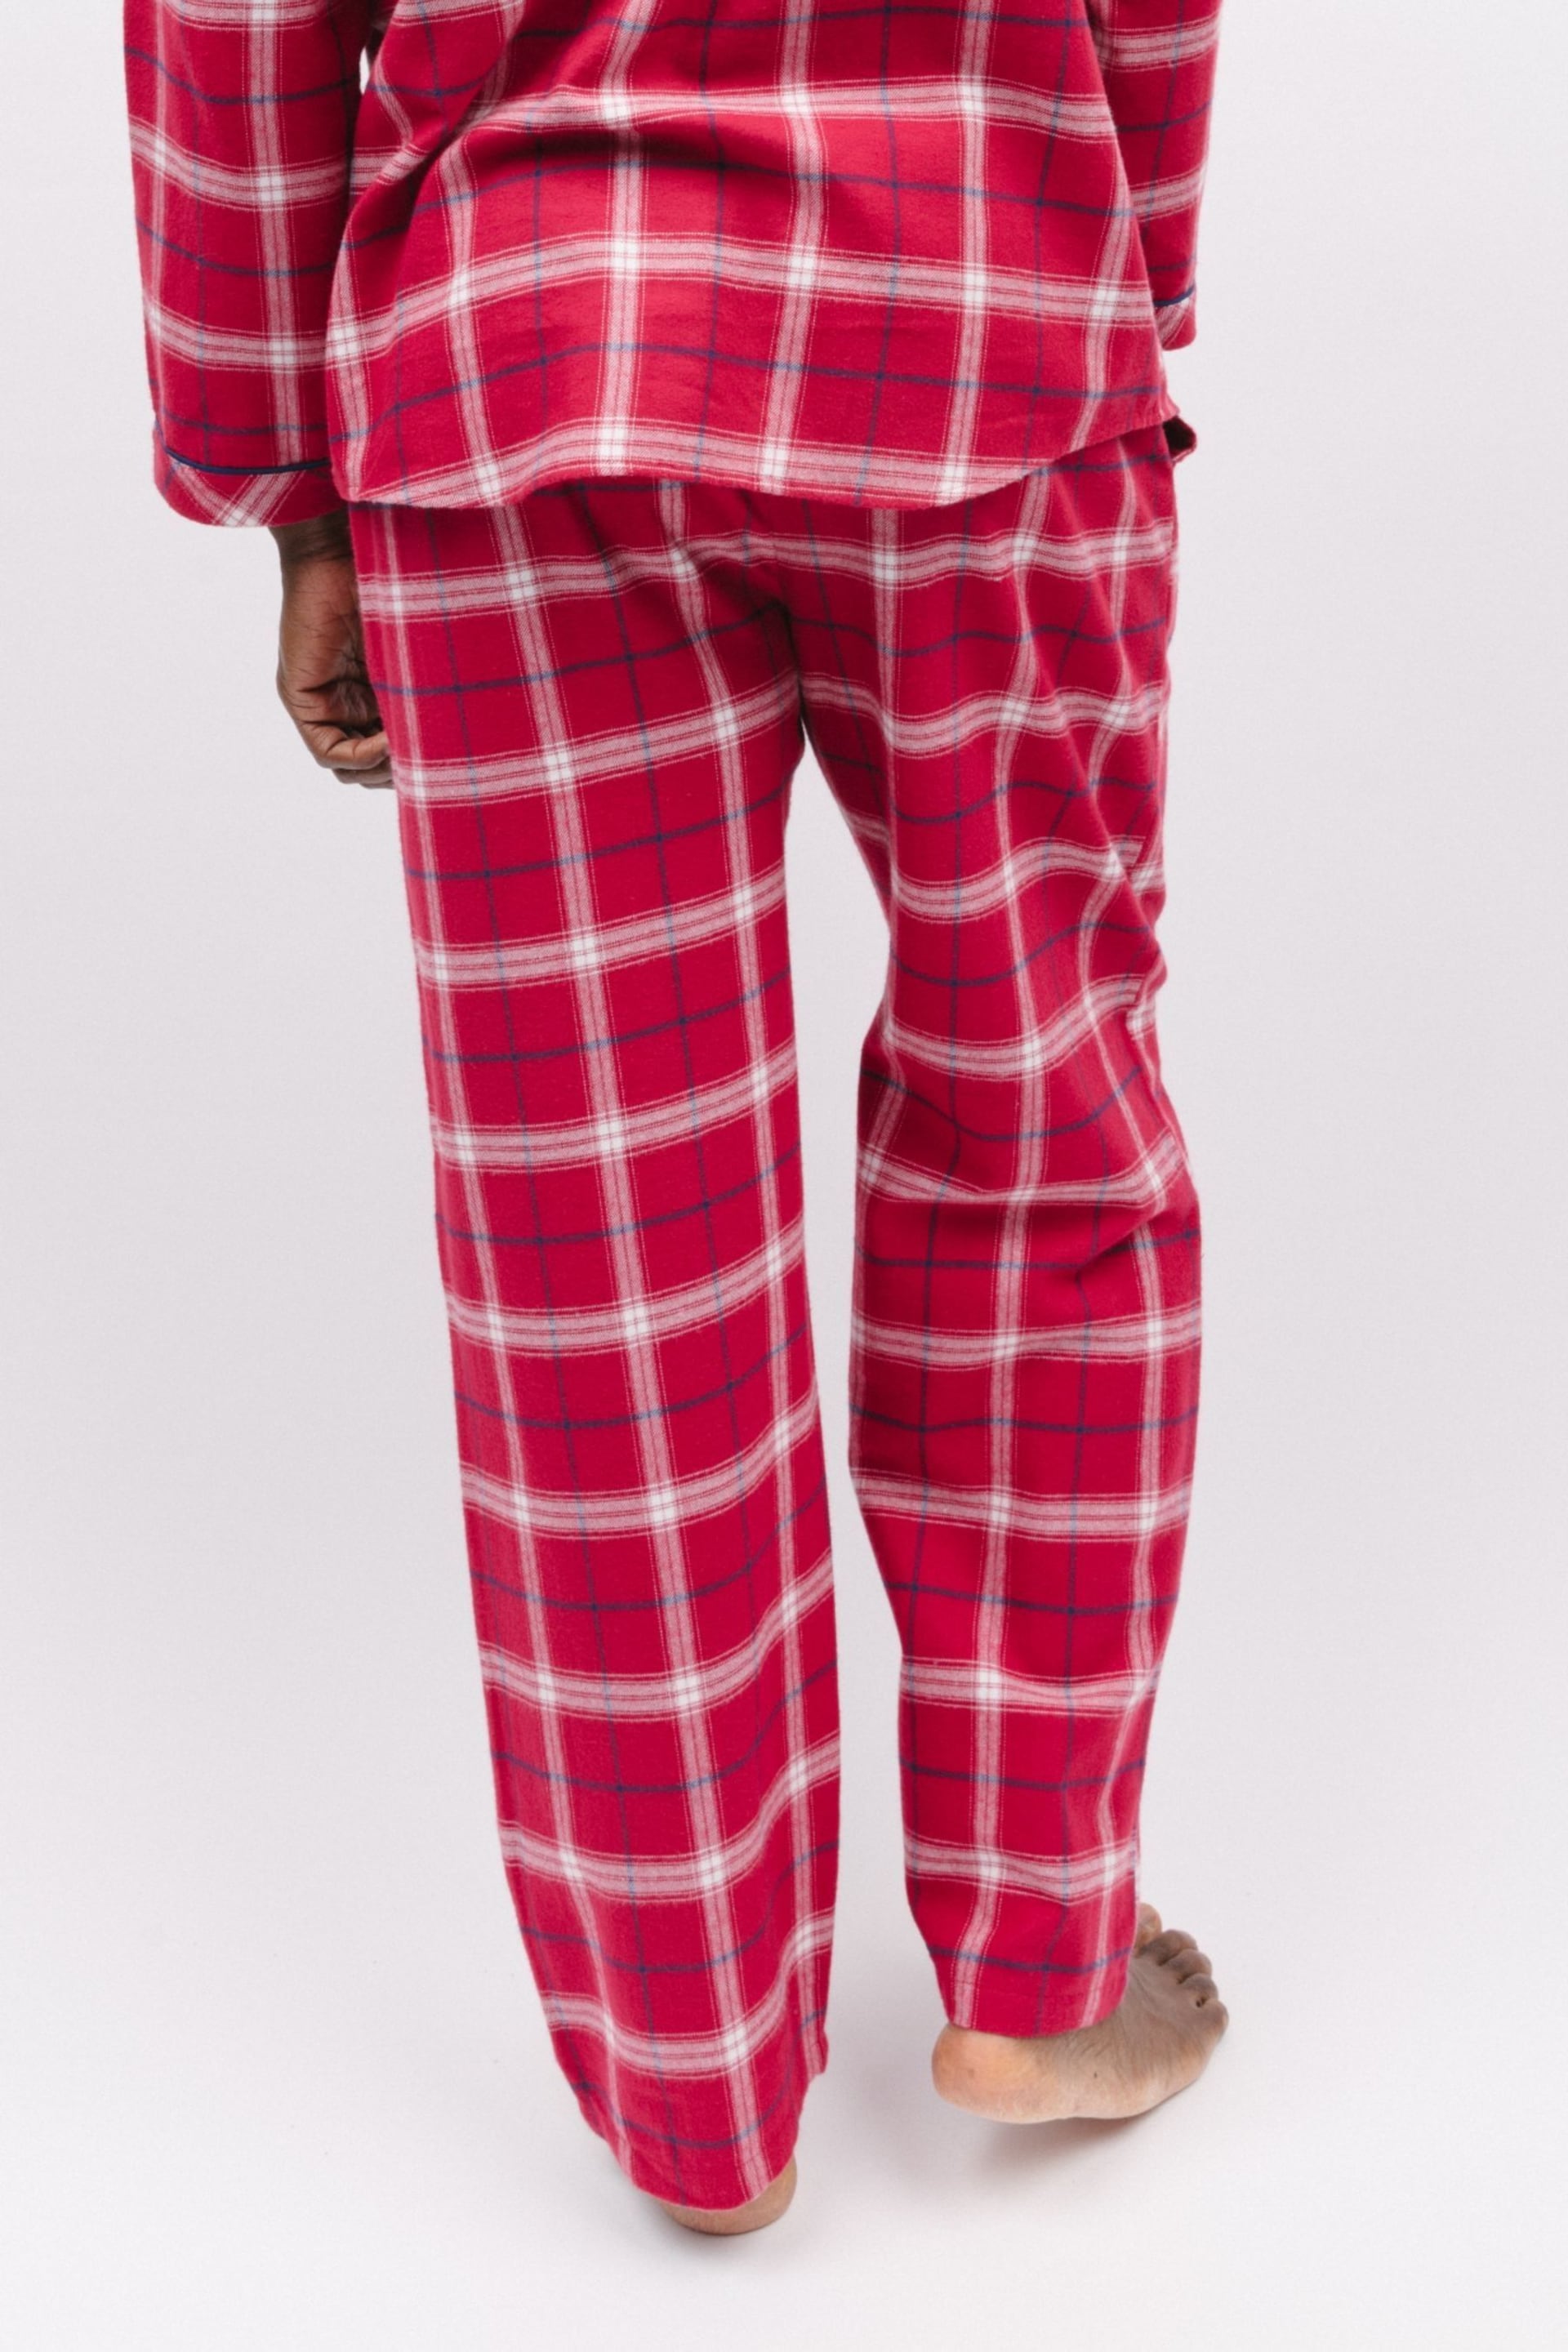 Cyberjammies Red Check Pyjamas Bottoms - Image 3 of 4